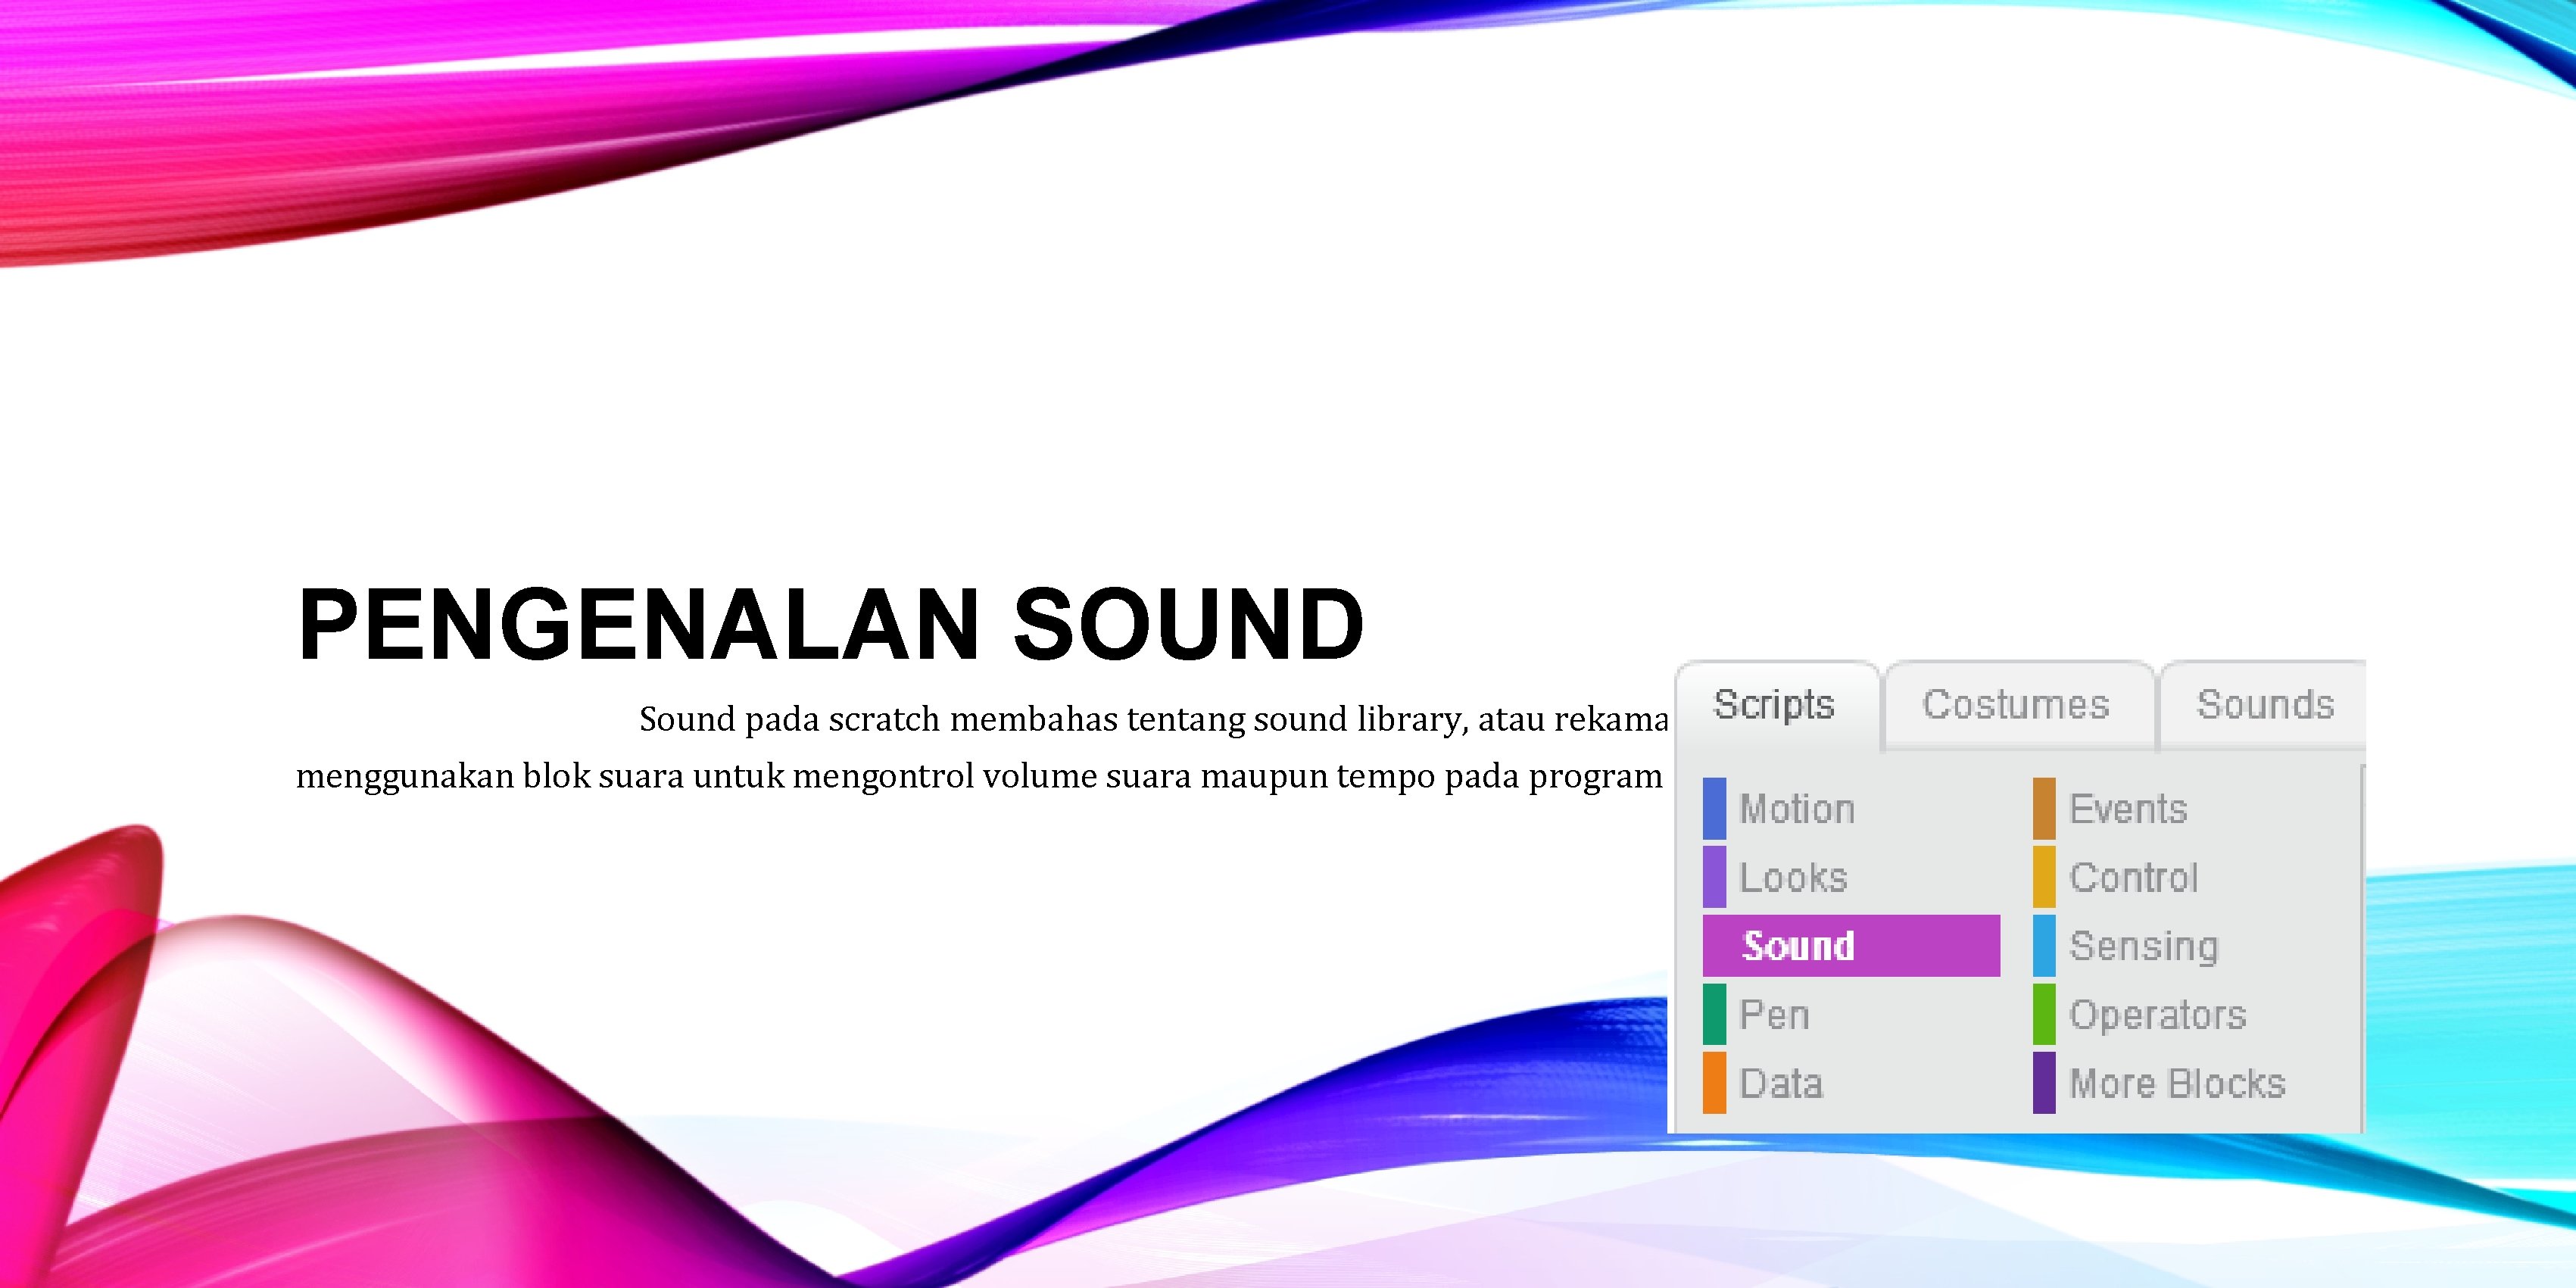 PENGENALAN SOUND Sound pada scratch membahas tentang sound library, atau rekaman. Suara dapat dimainkan